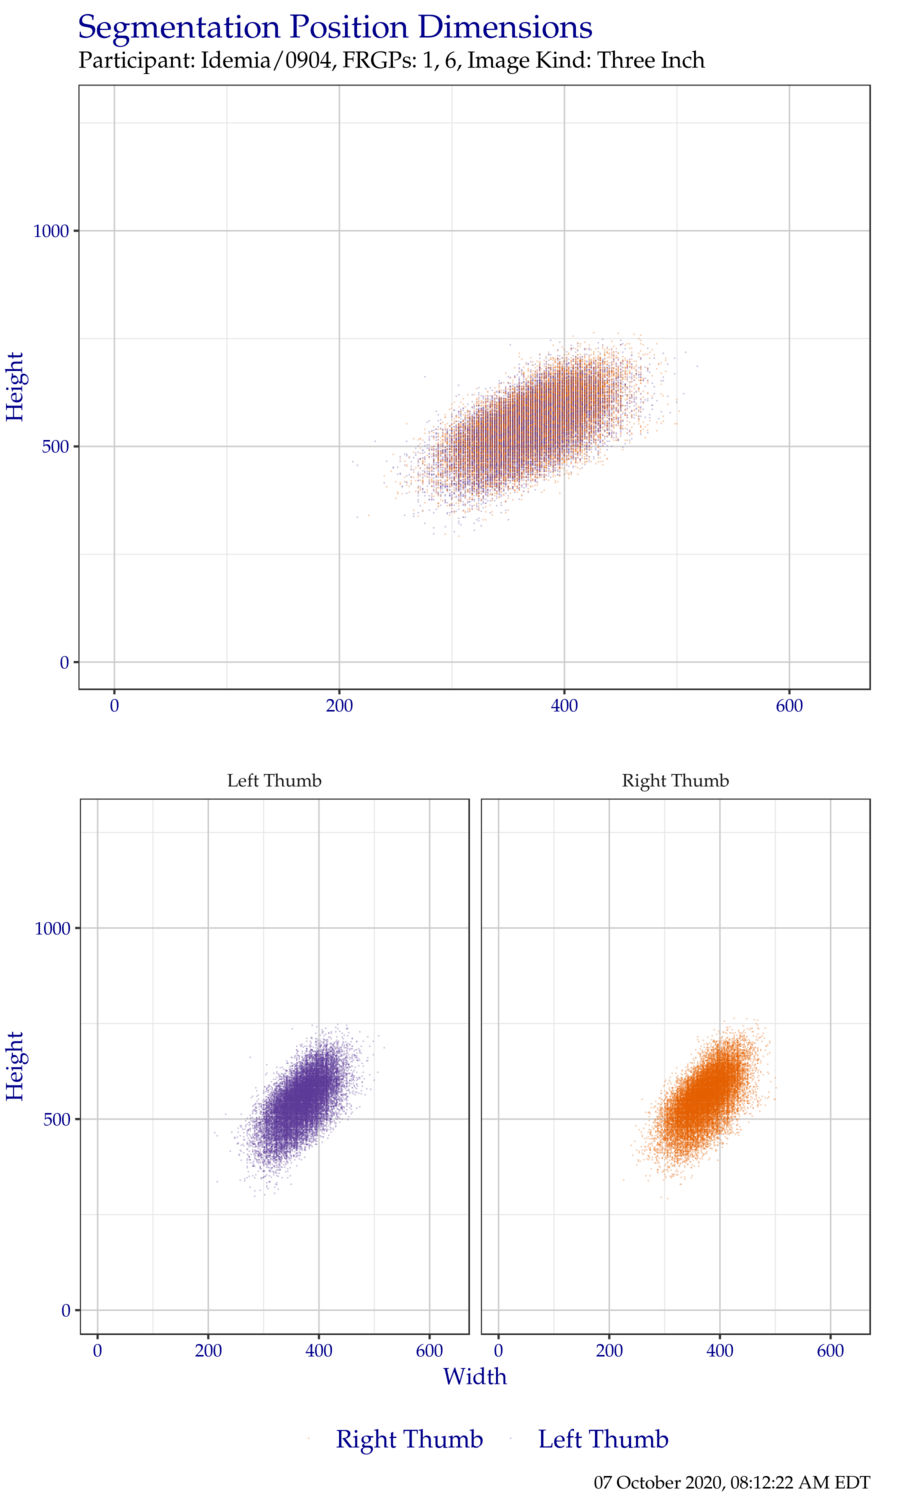 Segmentation position dimensions for thumb ThreeInch data.